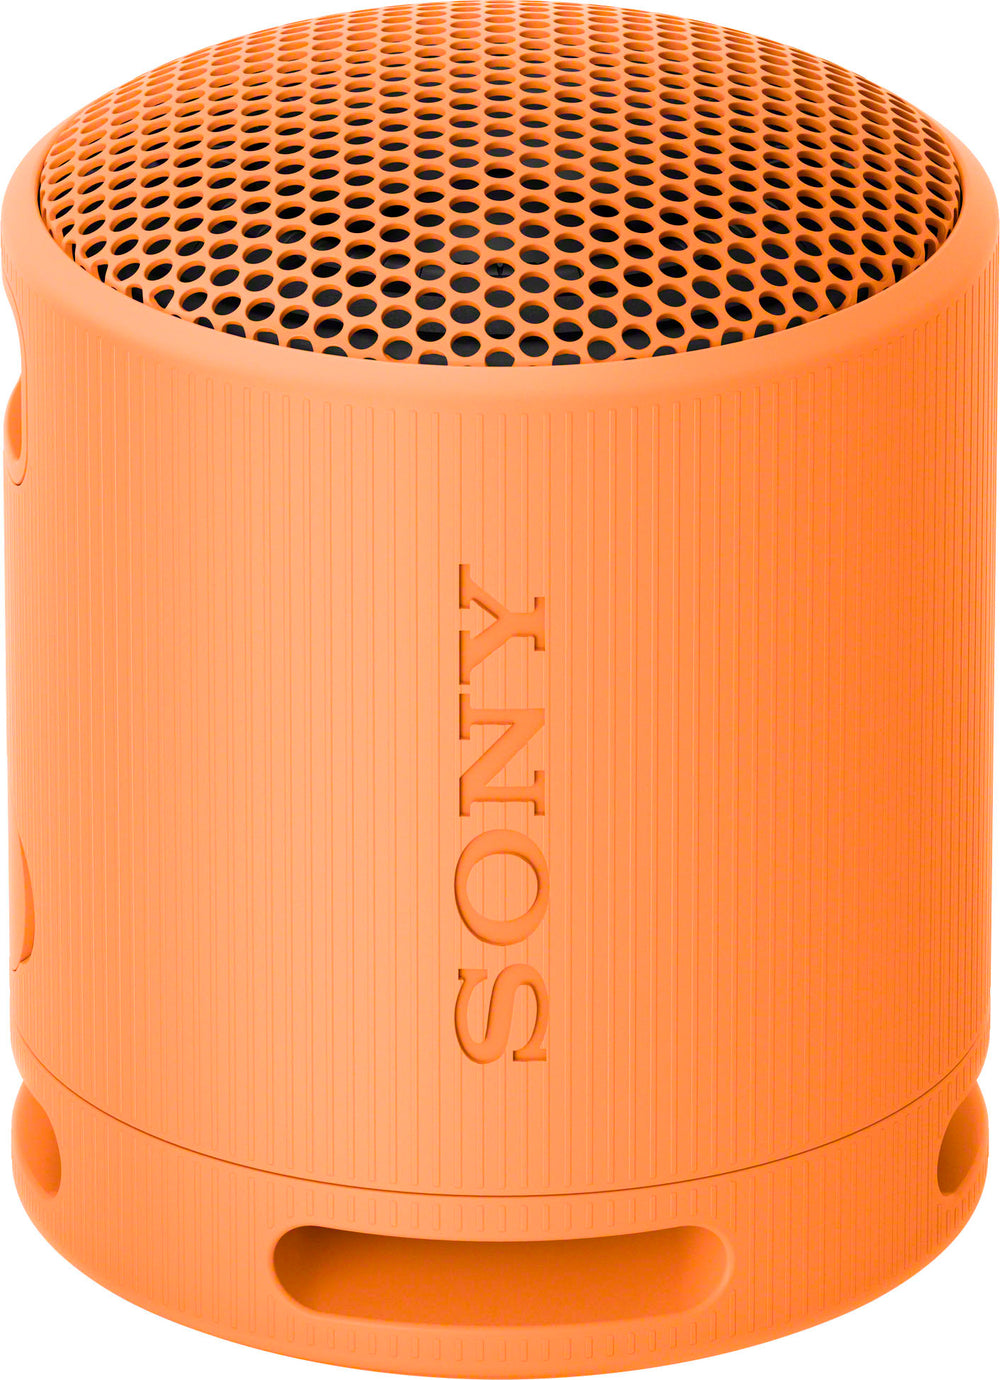 Sony - XB100 Compact Bluetooth Speaker - Orange_1